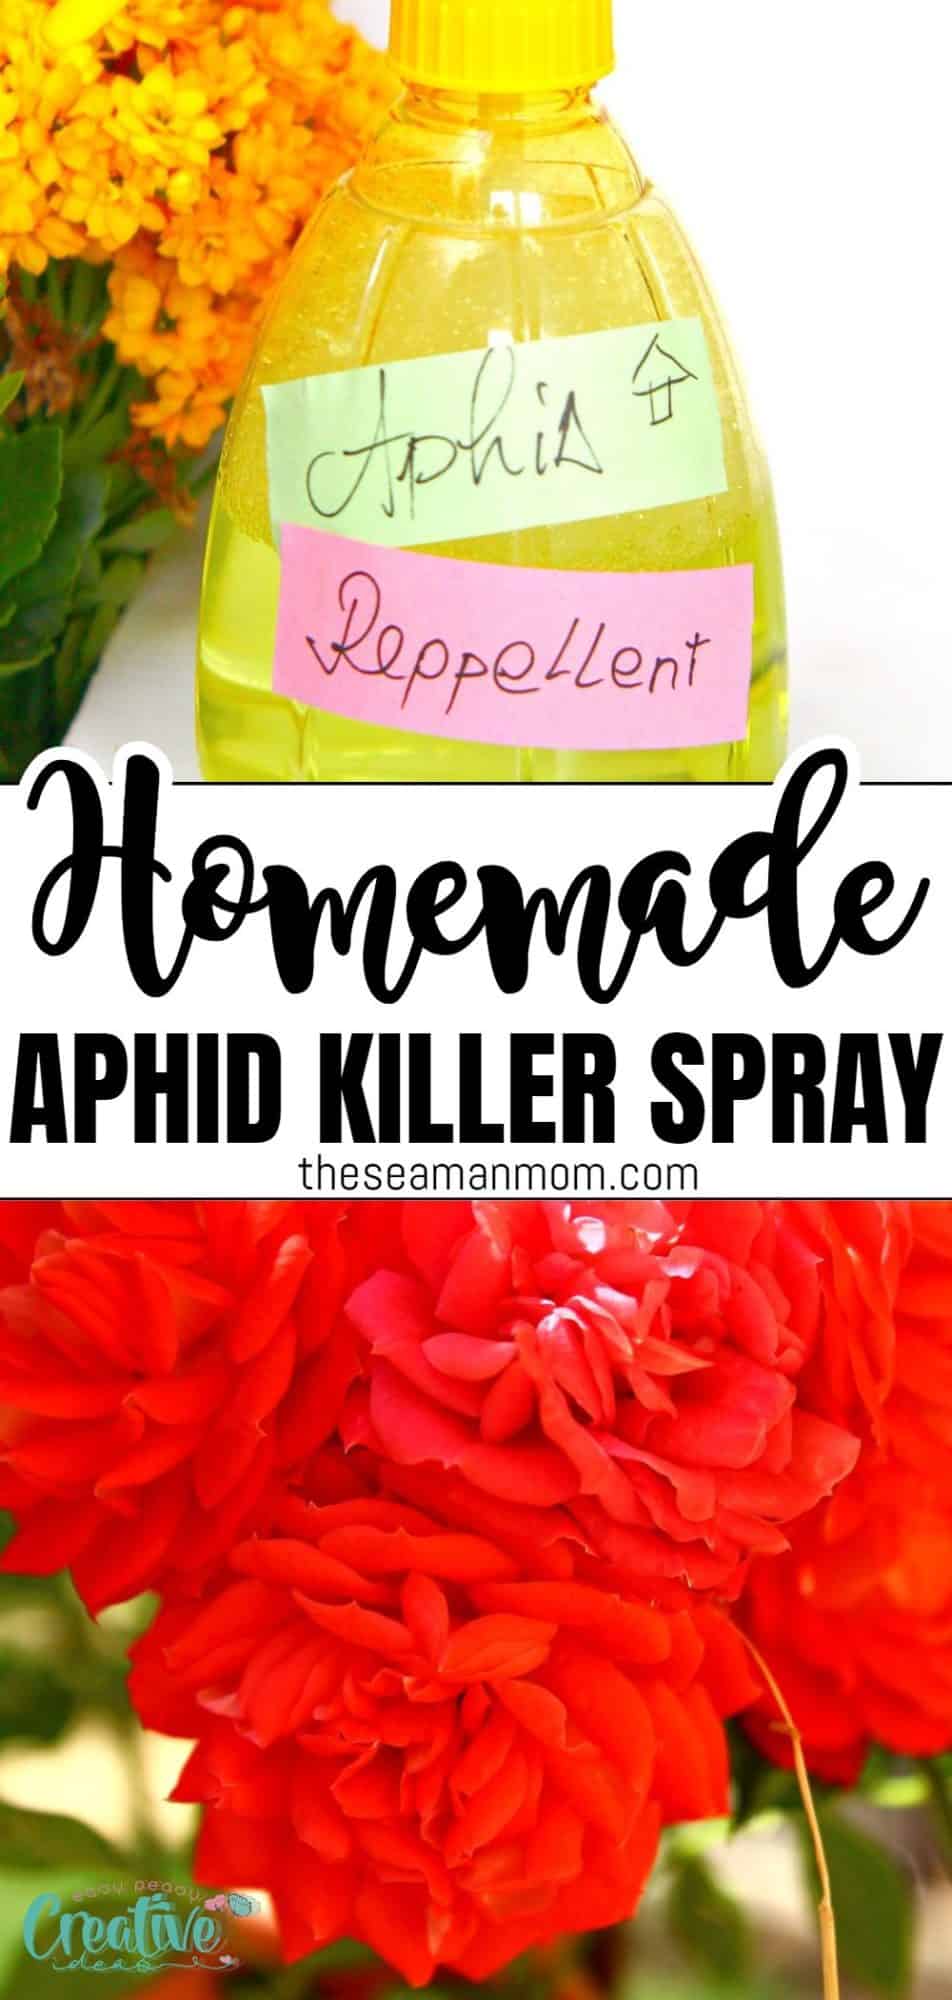 Homemade aphid spray for garden